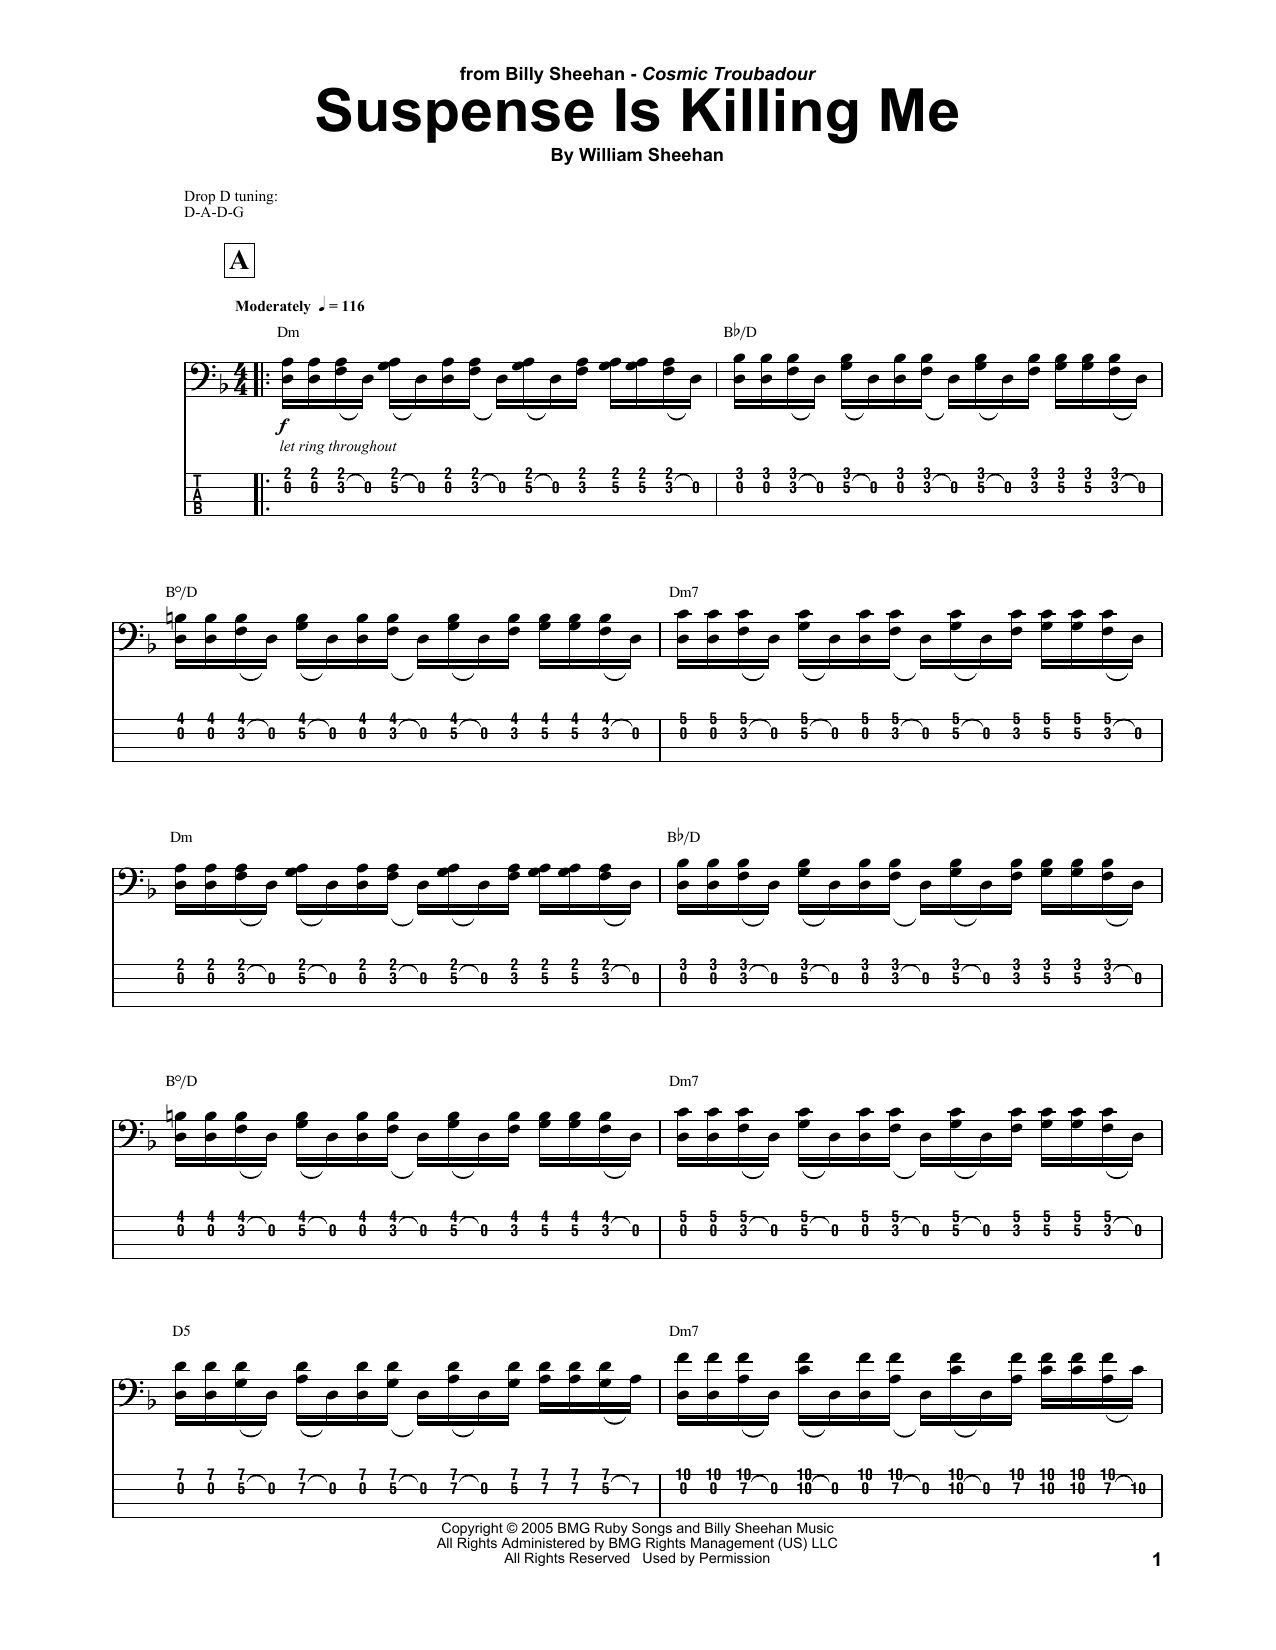 Billy Sheehan Suspense Is Killing Me Sheet Music Notes & Chords for Bass Guitar Tab - Download or Print PDF